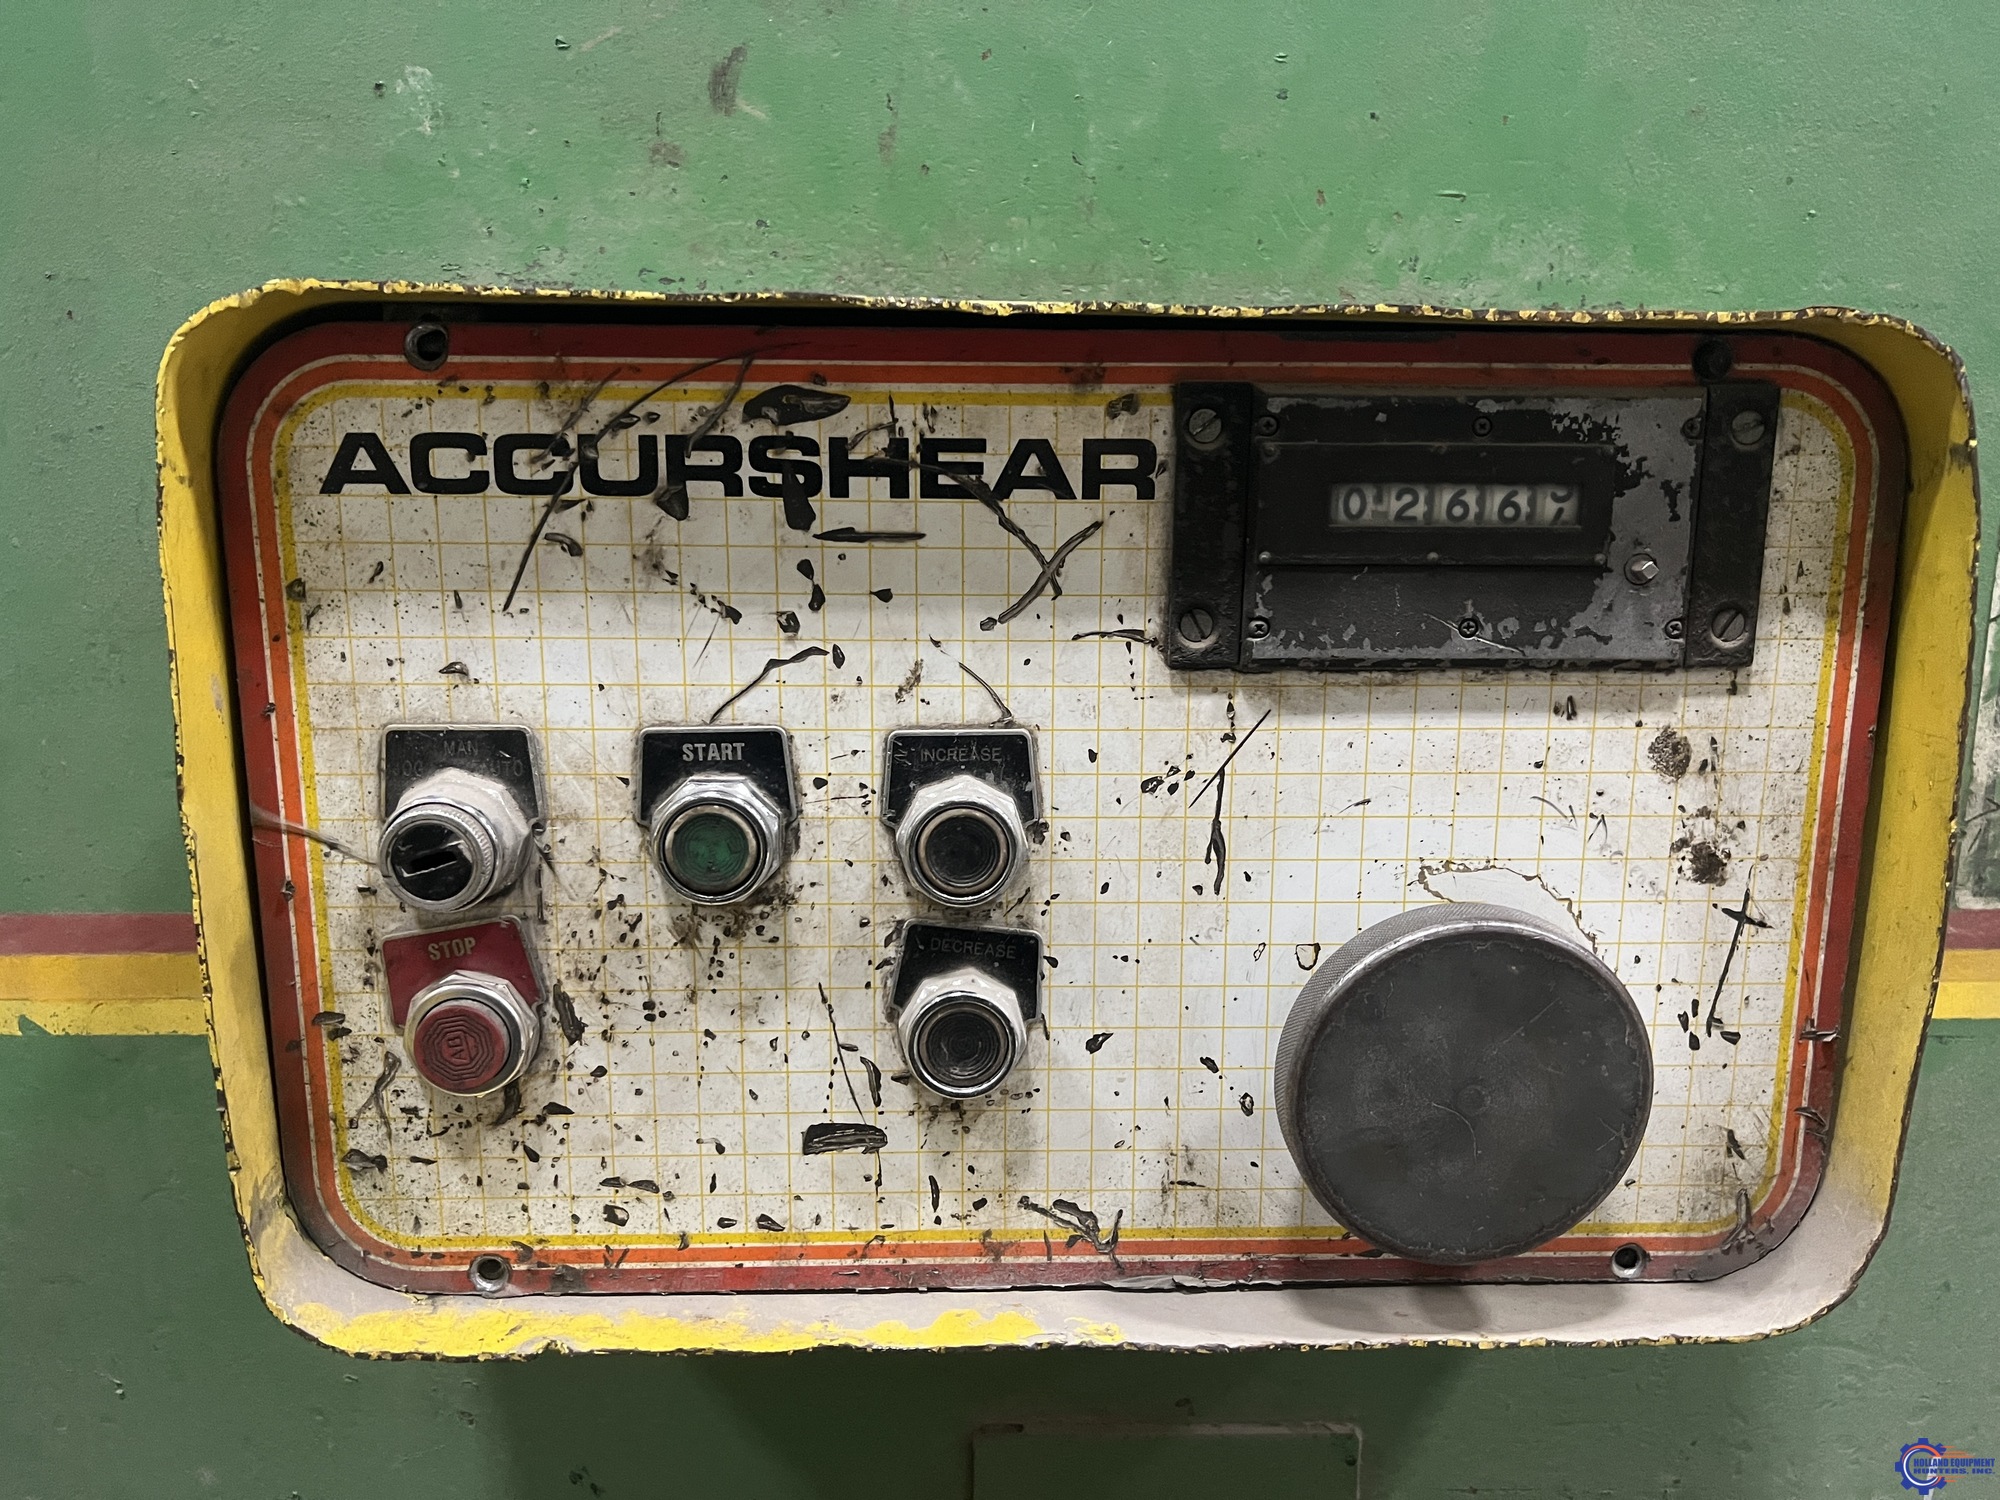 1987 ACCURSHEAR 837510 Fabricating Machinery, Power Squaring Shears (Inch) | Holland Equipment Hunters, Inc.